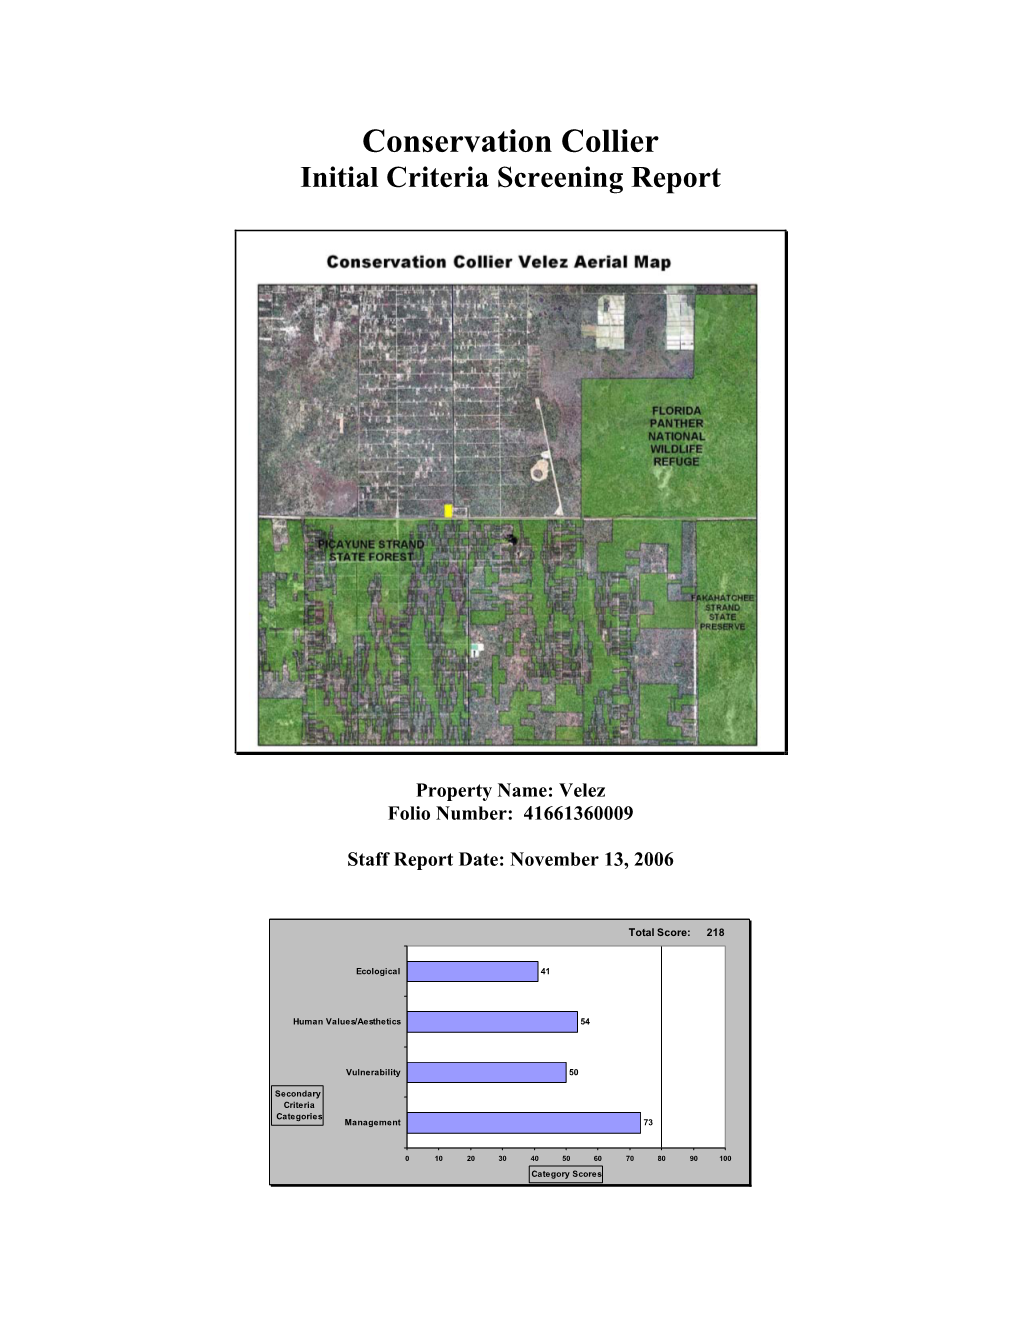 Conservation Collier Initial Criteria Screening Report